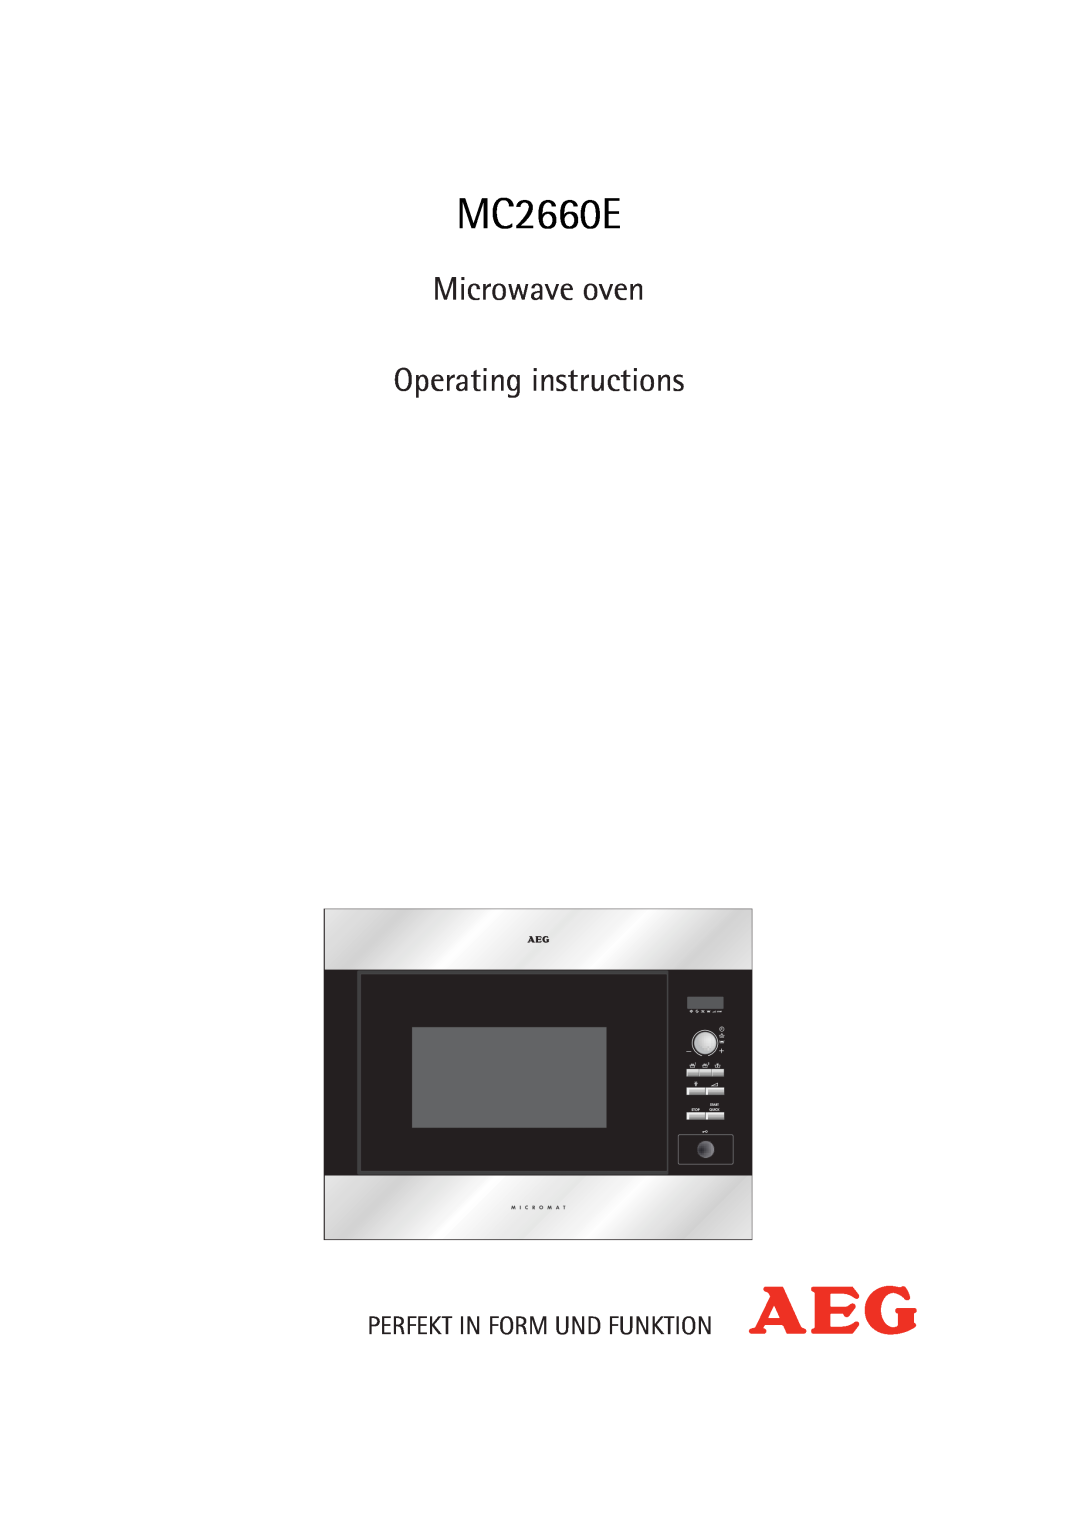 AEG MC2660E operating instructions Microwave oven Operating instructions, Perfekt In Form Und Funktion 